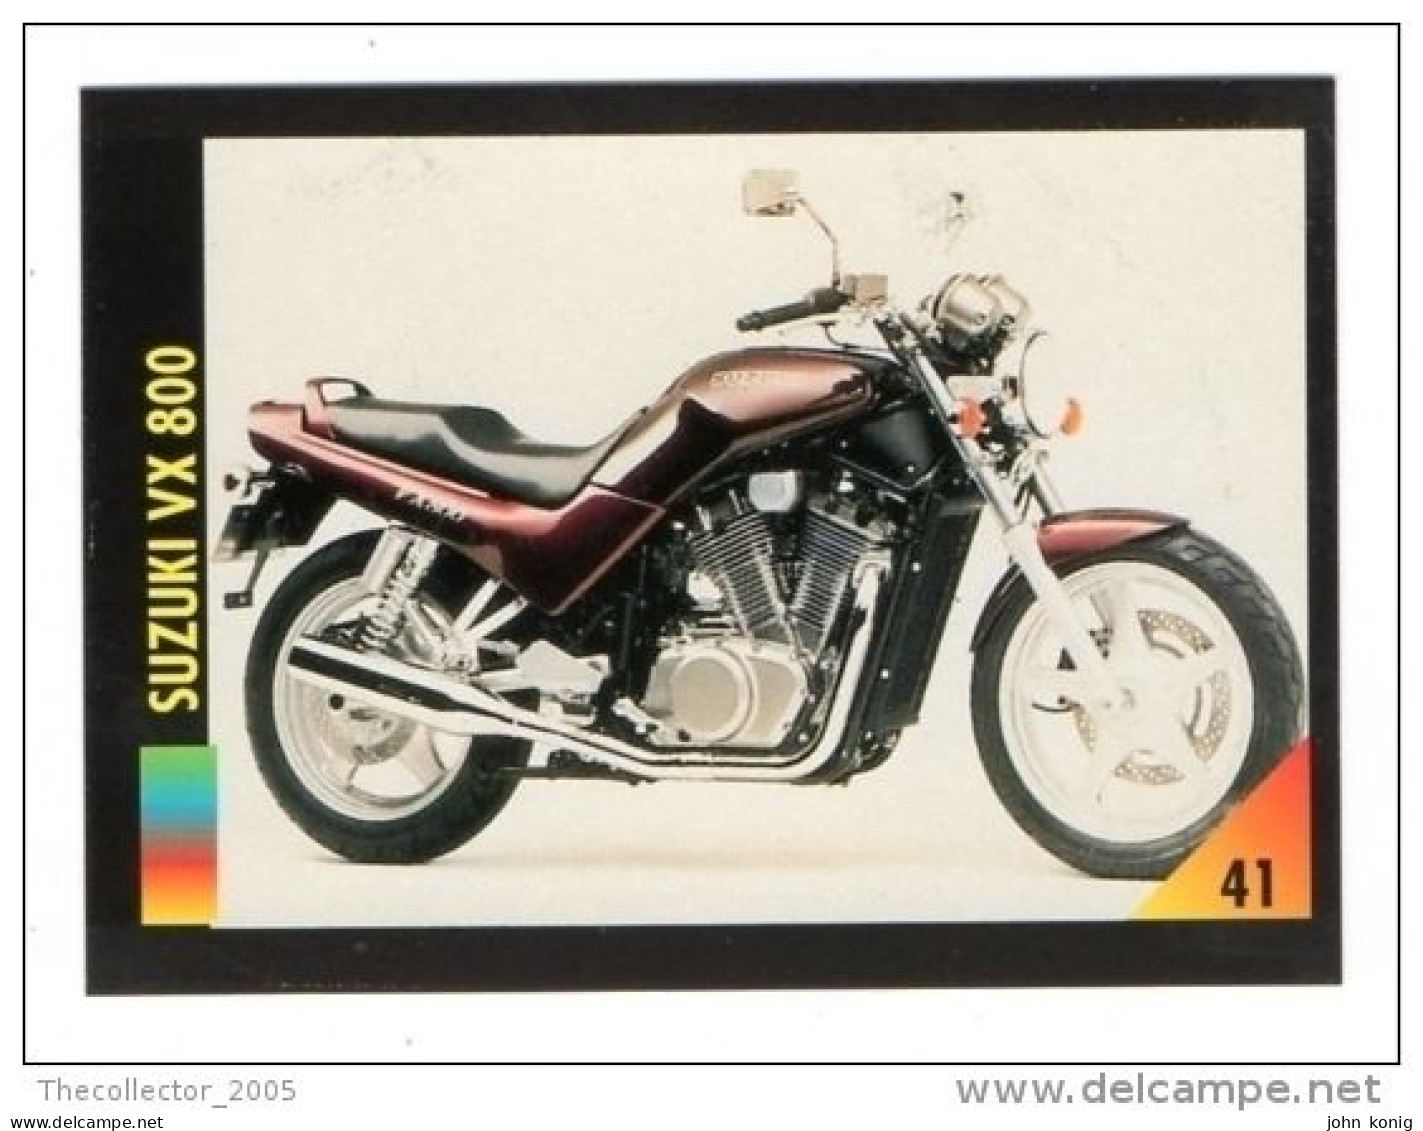 FIGURINA TRADING CARDS - LA MIA MOTO - MY MOTORBIKE - MASTERS EDIZIONI (1993) - SUZUKI VX 800 - Auto & Verkehr